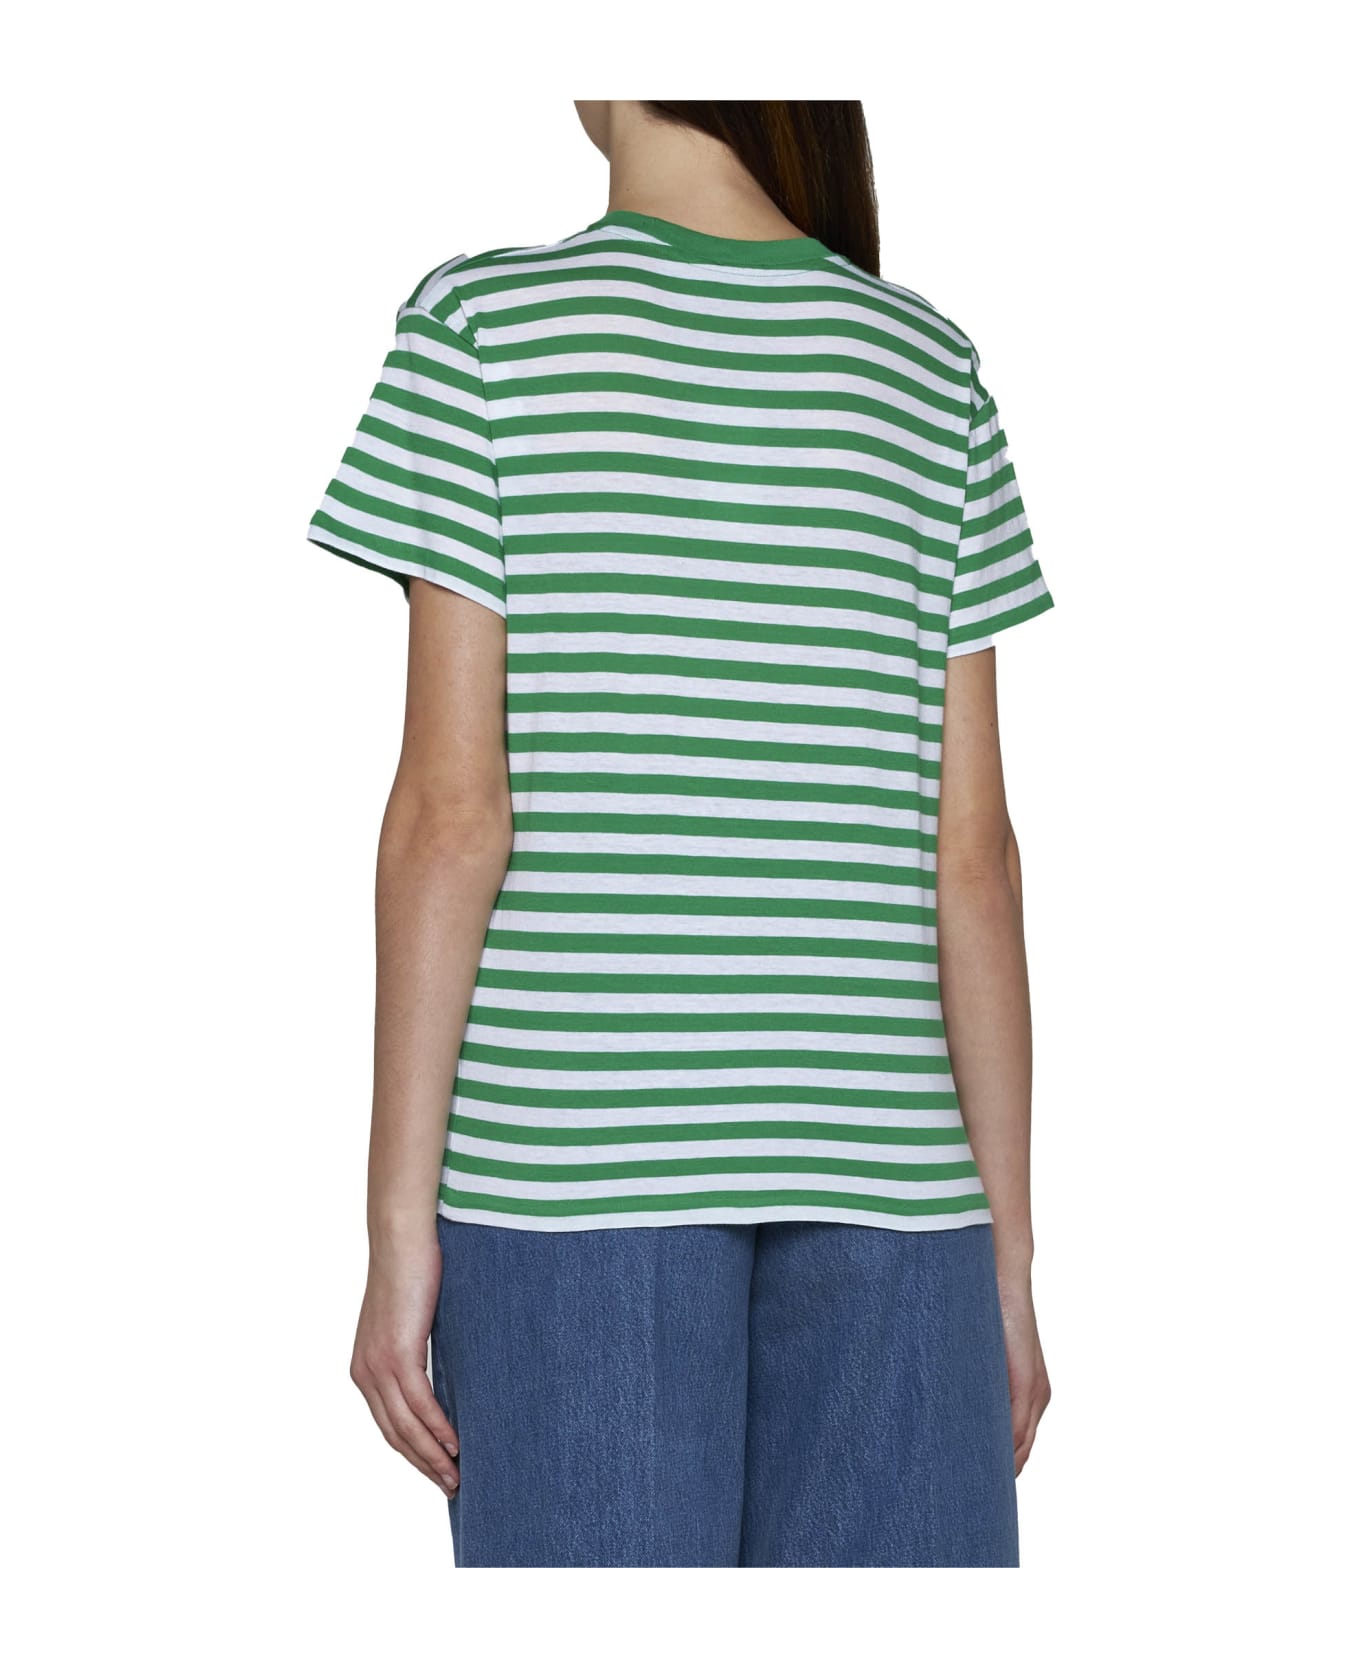 Polo Ralph Lauren T-Shirt - Preppy green/white